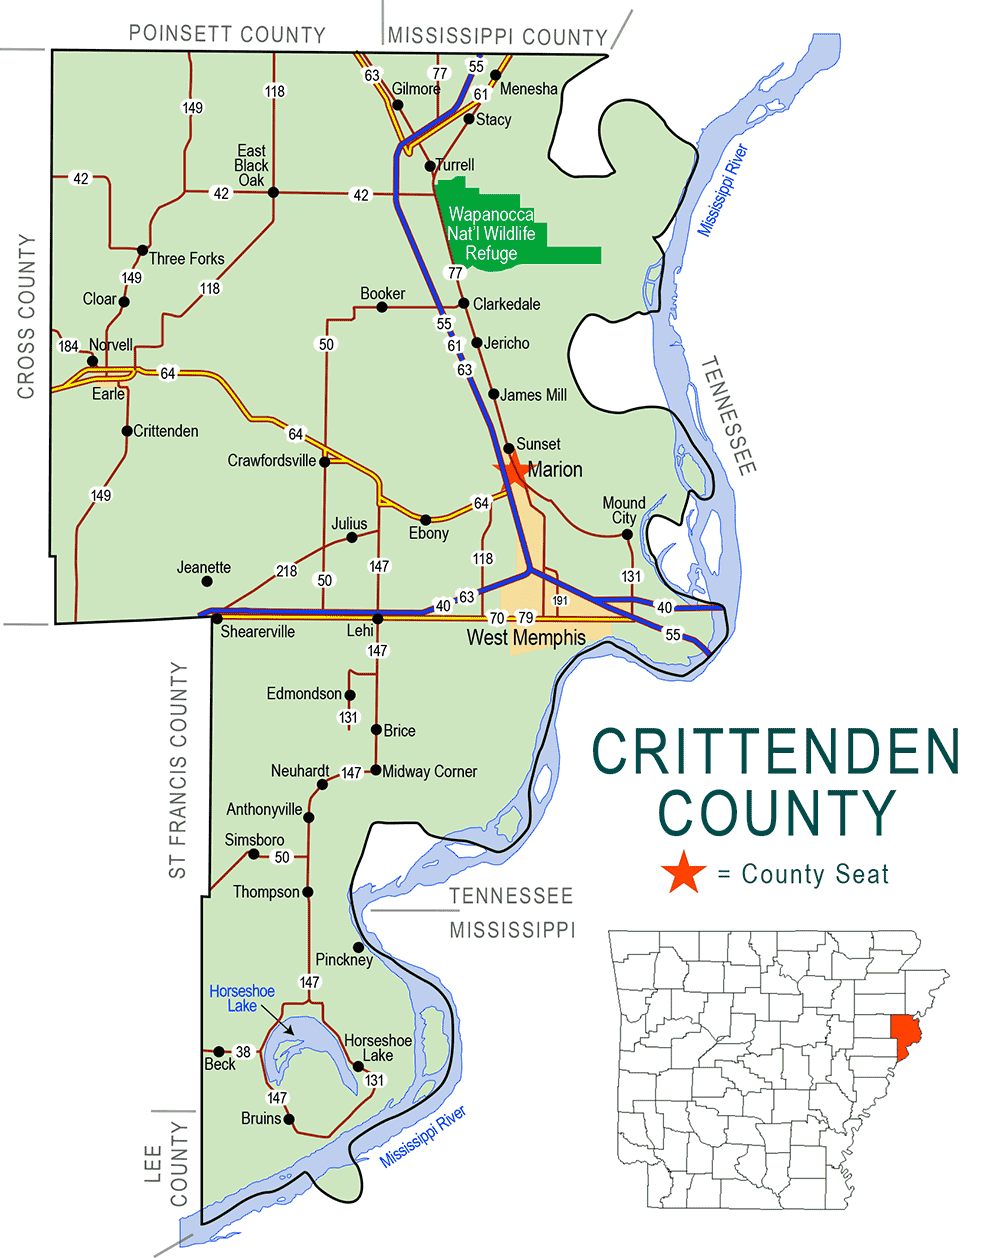 "Crittenden County" map with borders roads cities waterways wildlife refuge